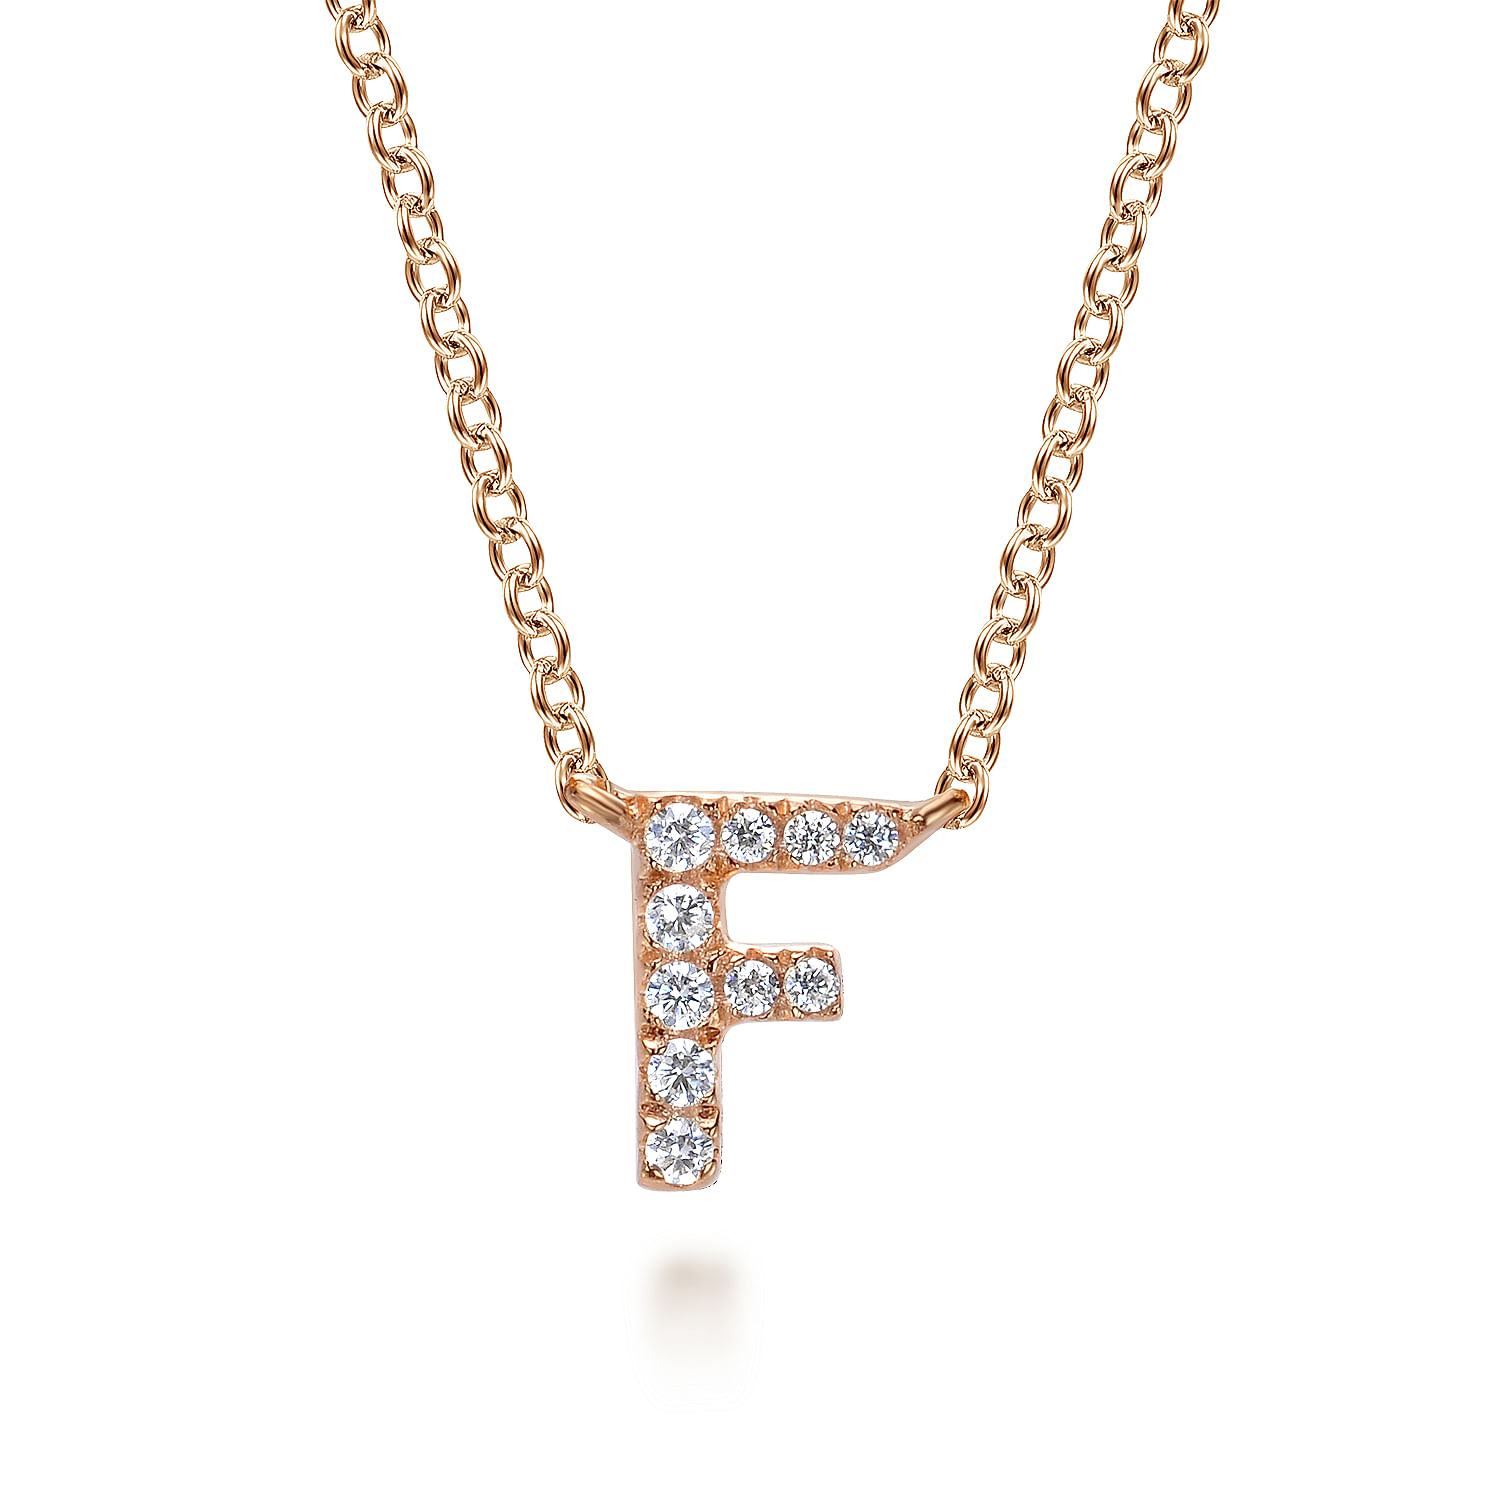 14K Rose Gold Diamond F Initial Pendant Necklace